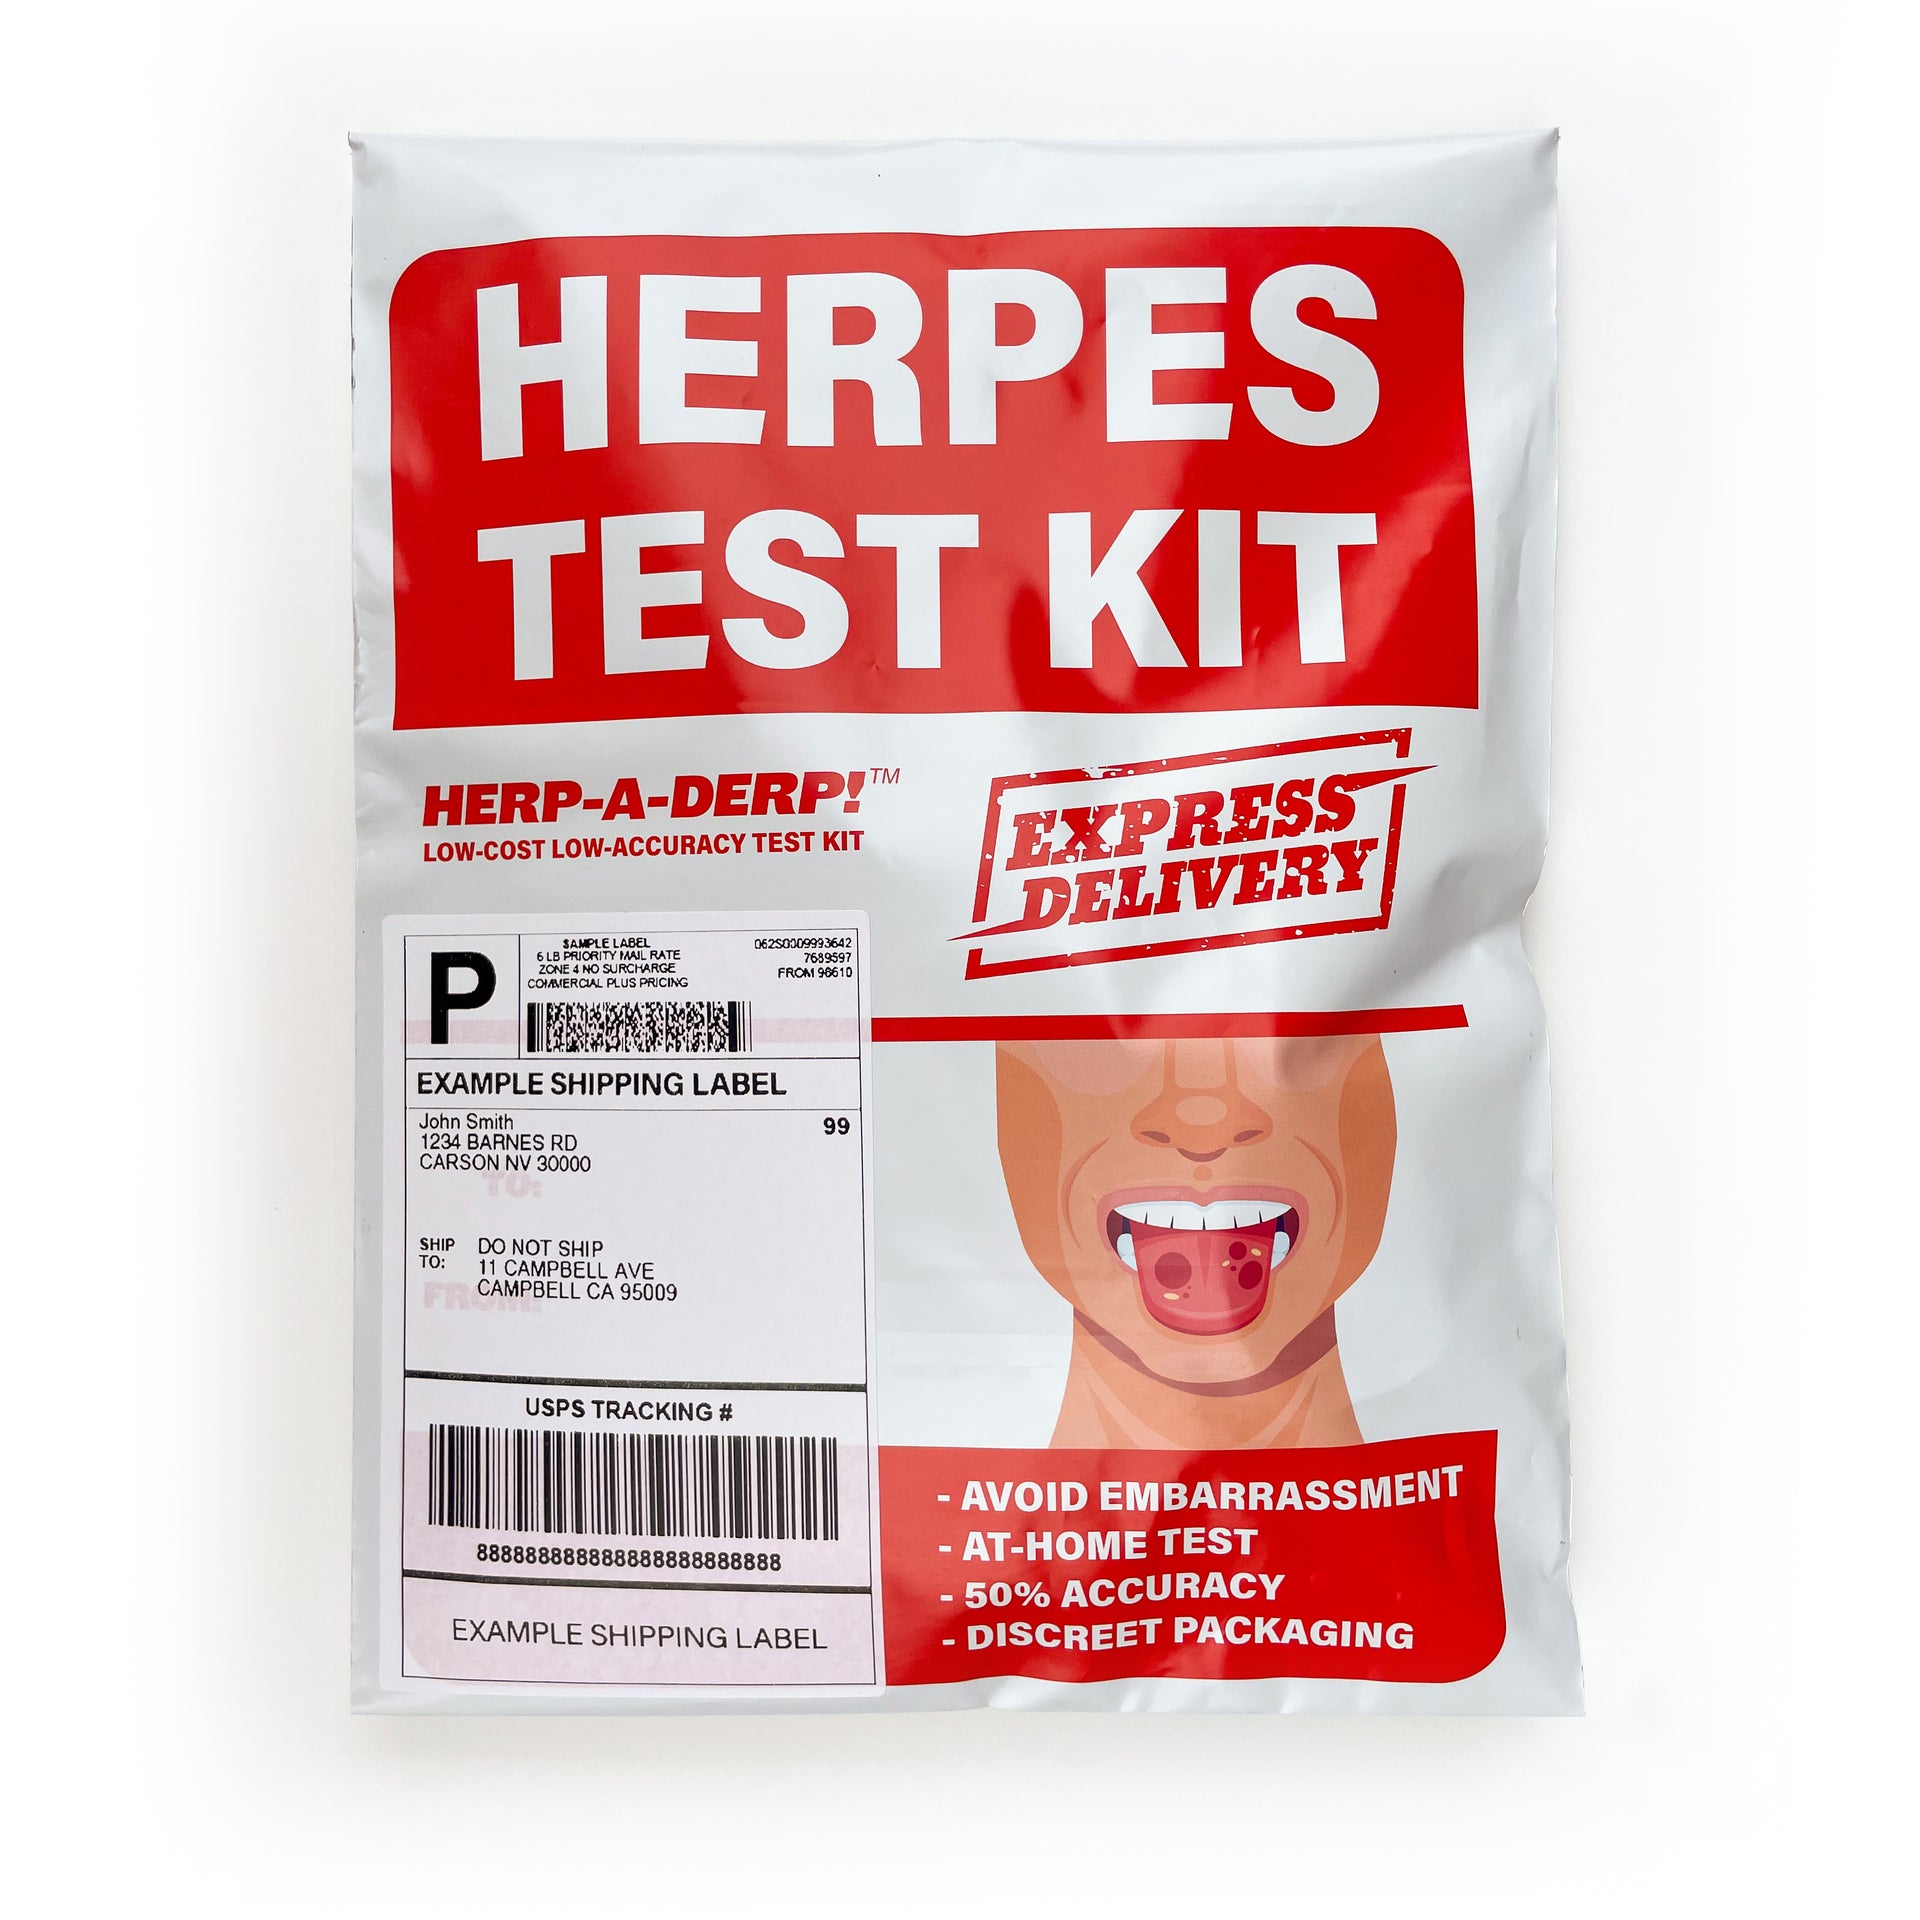 Send a Herpes Test Kit Prank Package